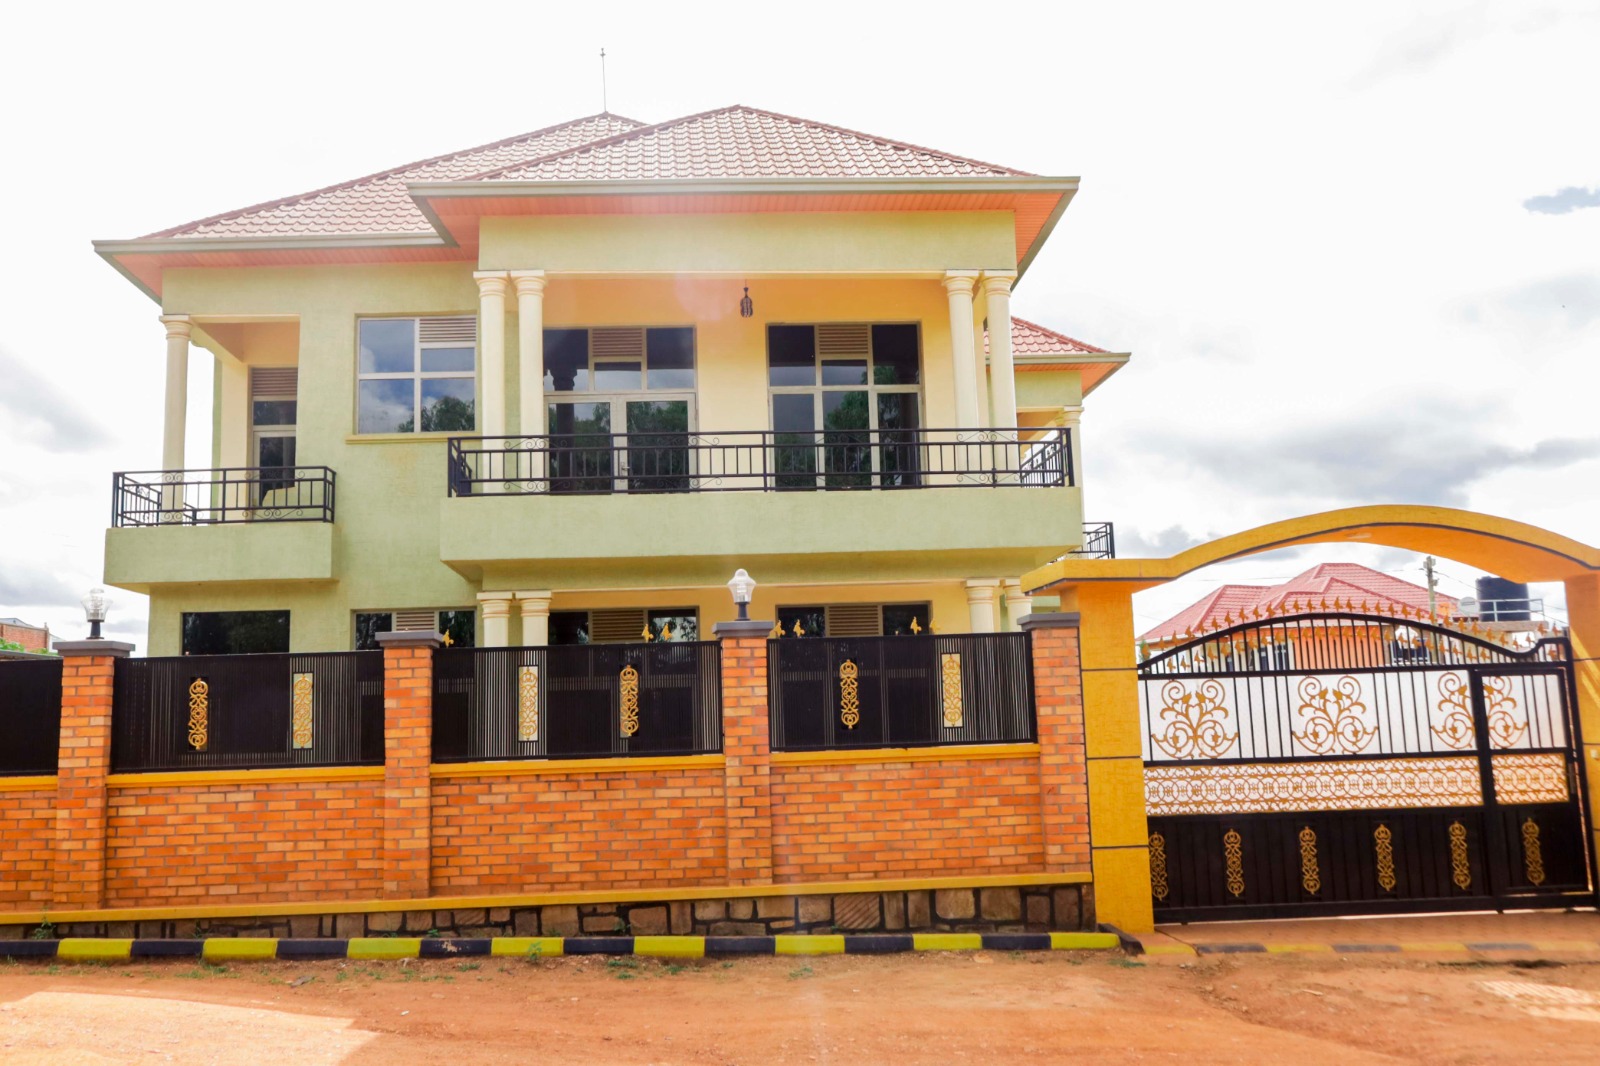 RR024: Gahanga kicukiro; big beautifull unfurnished house for rent in Kigali RwandaCall/watsap +250788385831